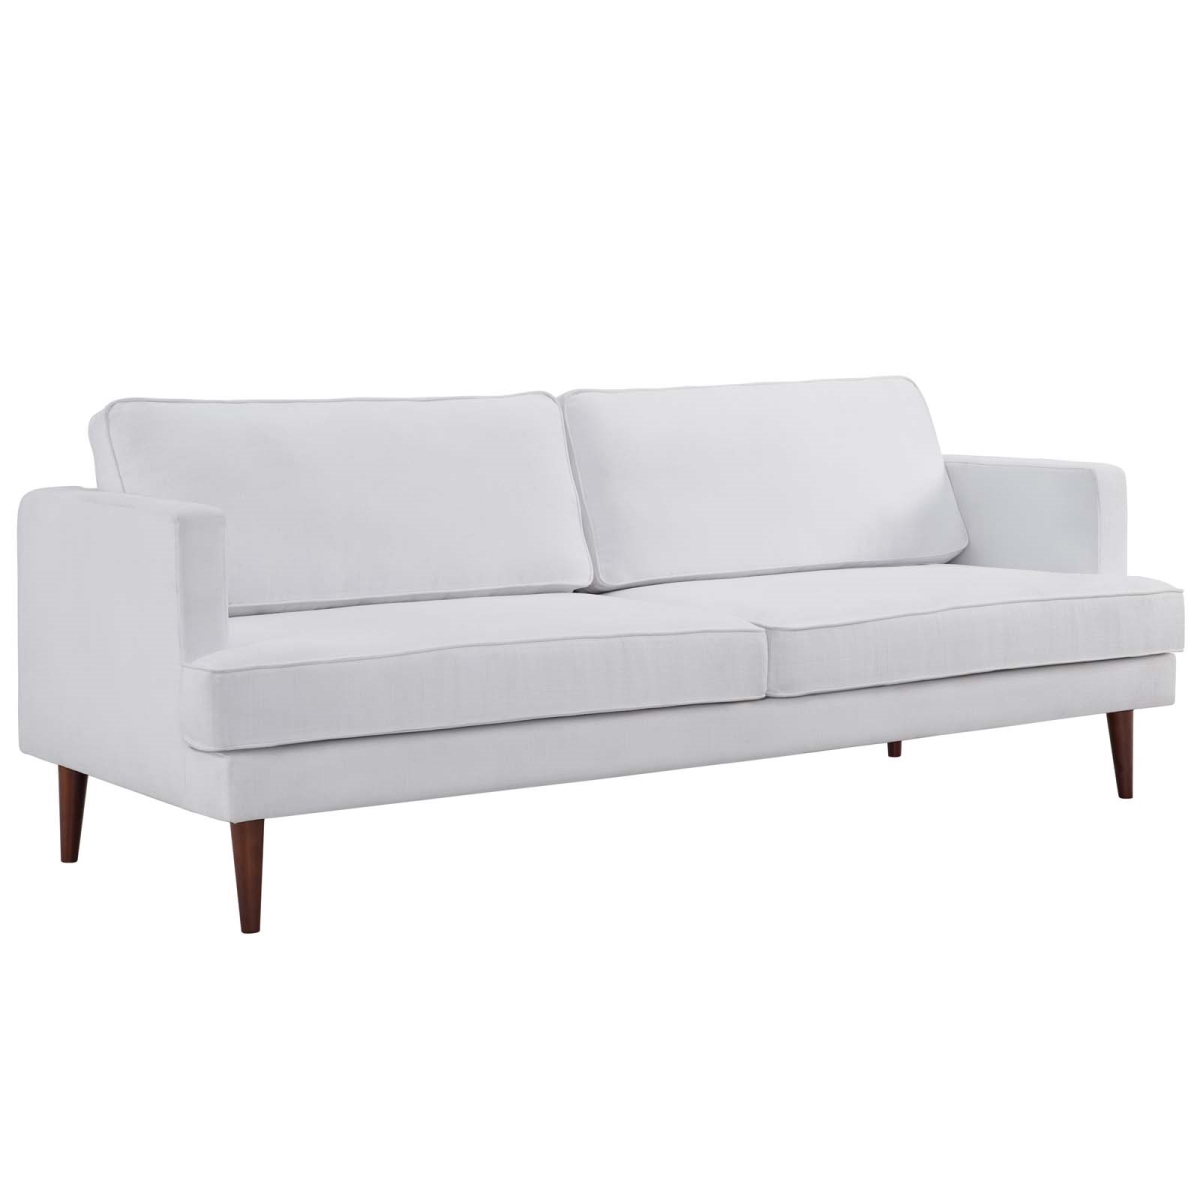 Eei-3057-whi Agile Upholstered Fabric Sofa - White, 34.5 X 35 X 86.5 In.